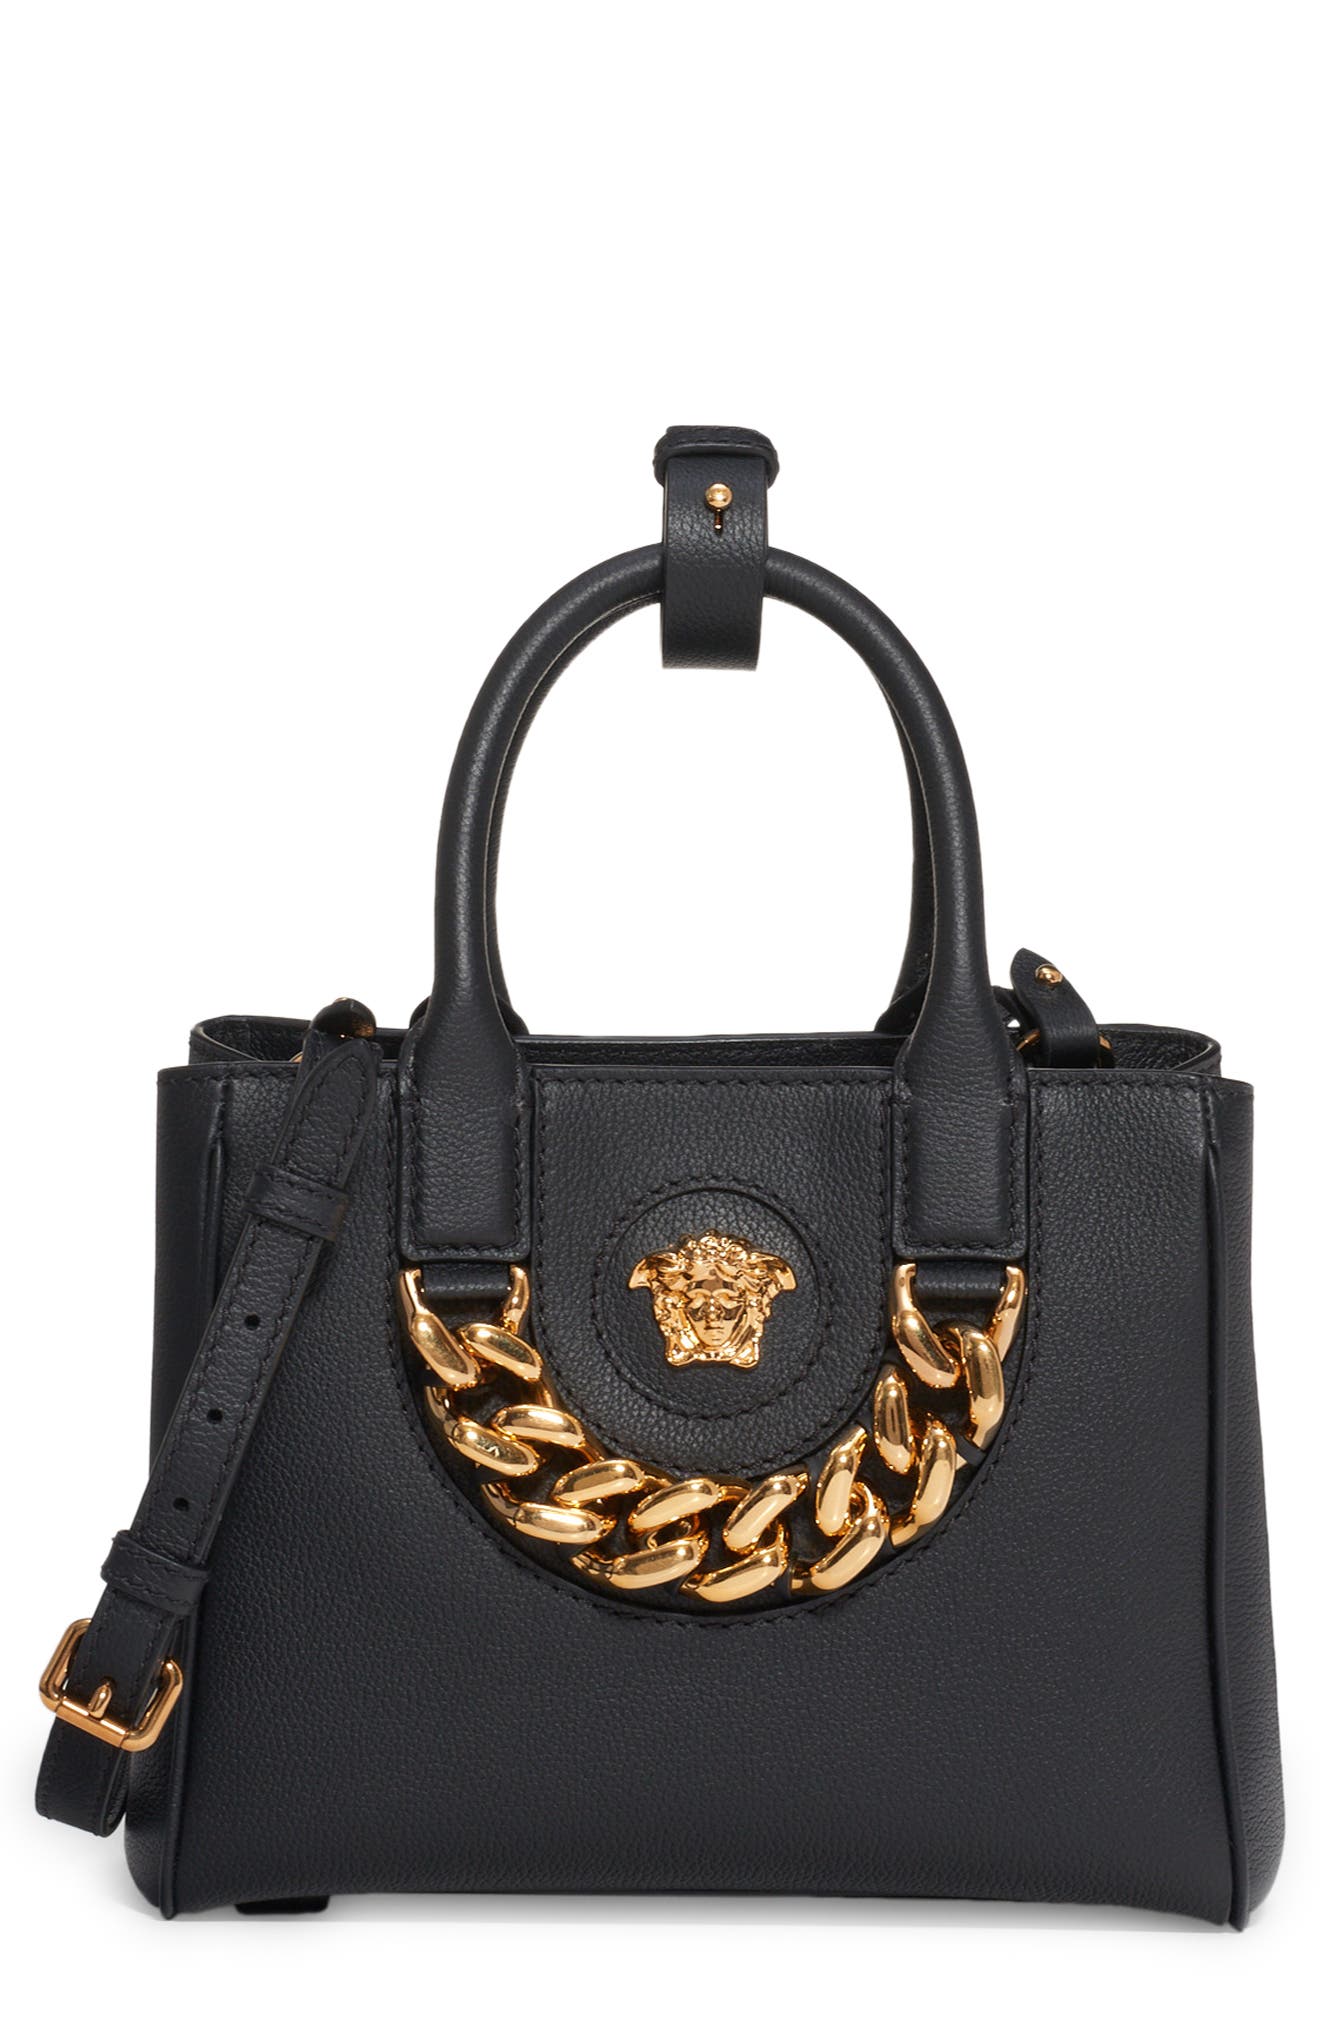 Versace Bag La Medusa Review + 5 Ways to Style This Runway Bag